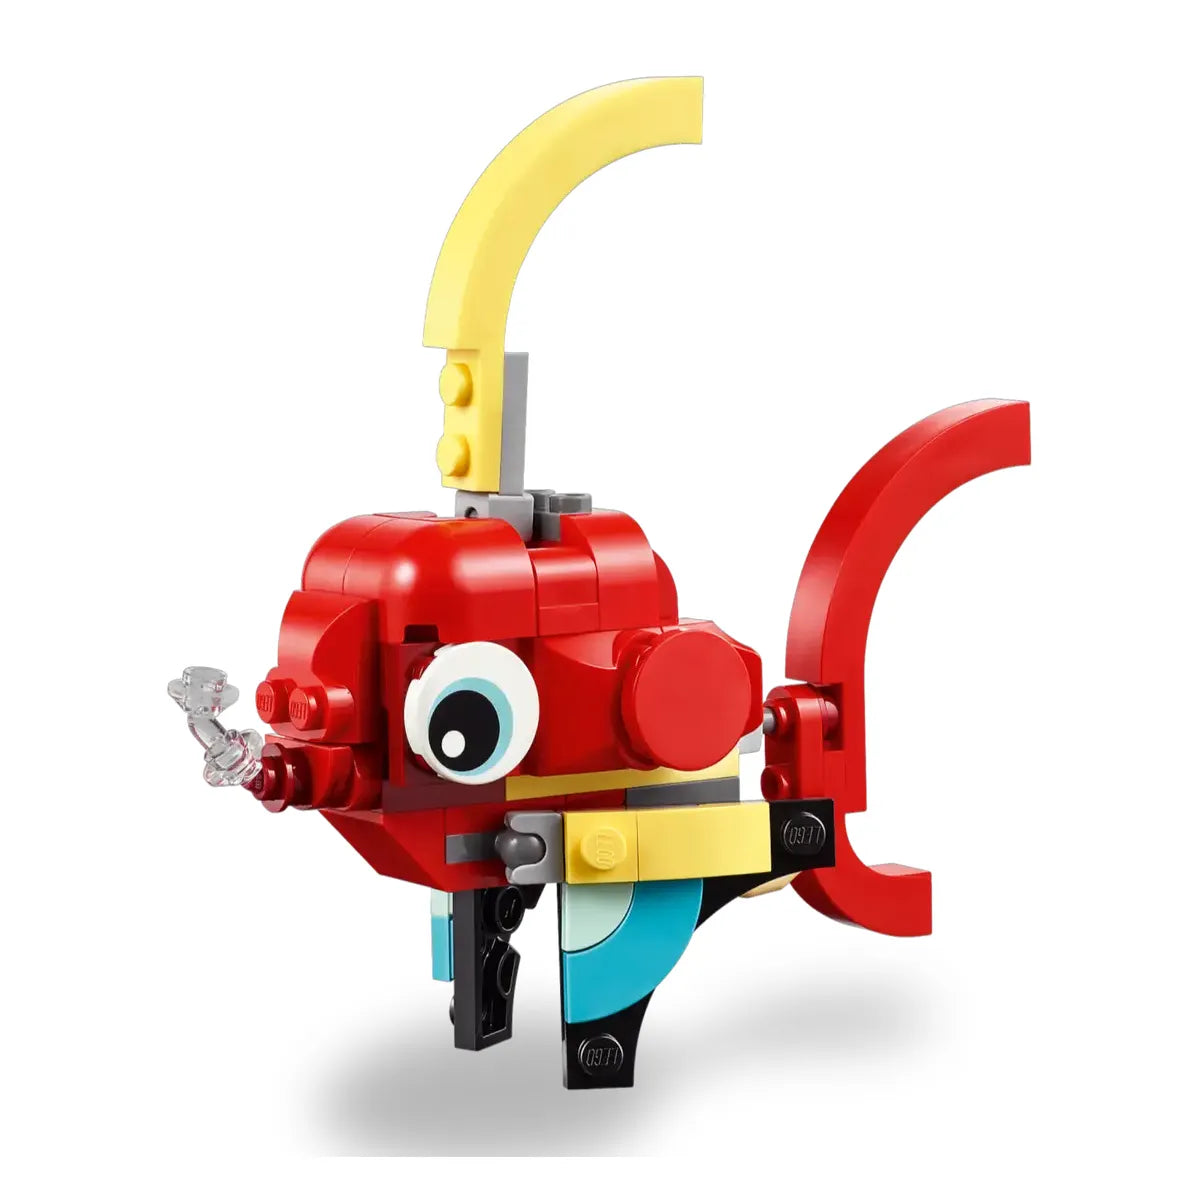 Lego Creator Red Dragon